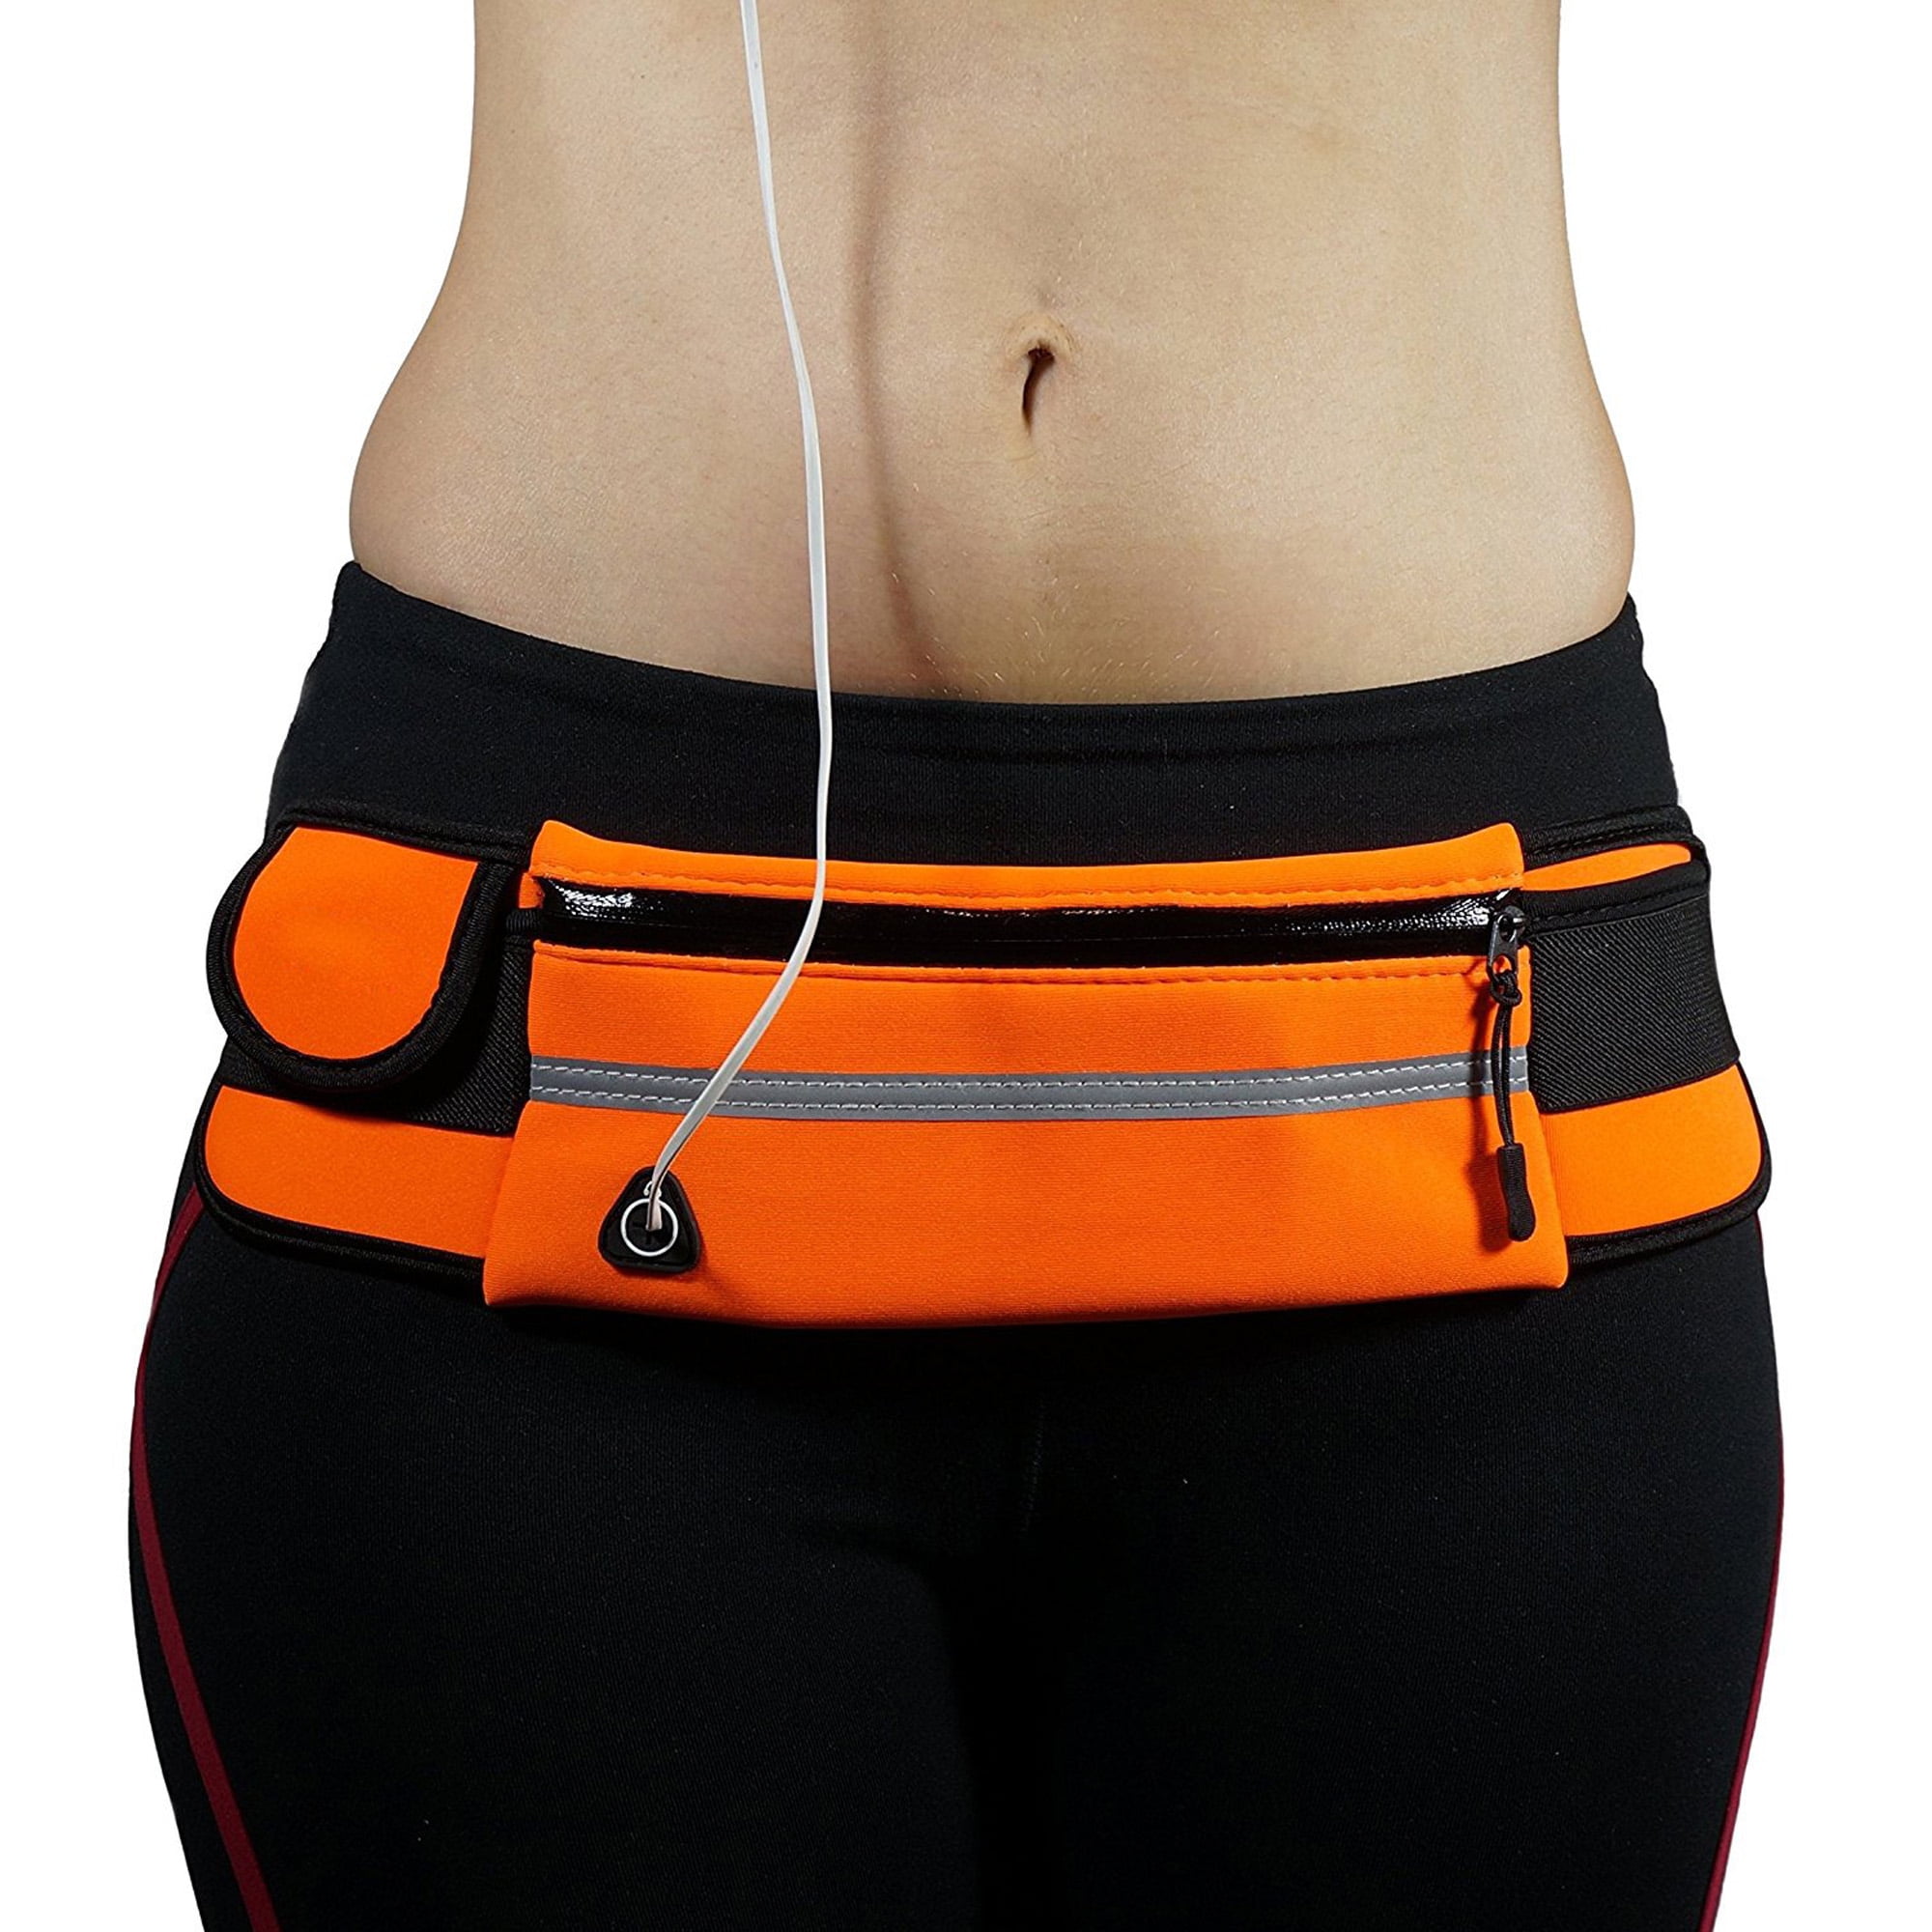 Proworks Sports Running Belt Bag with Adjustable Waist Strap & Storage Pouch 